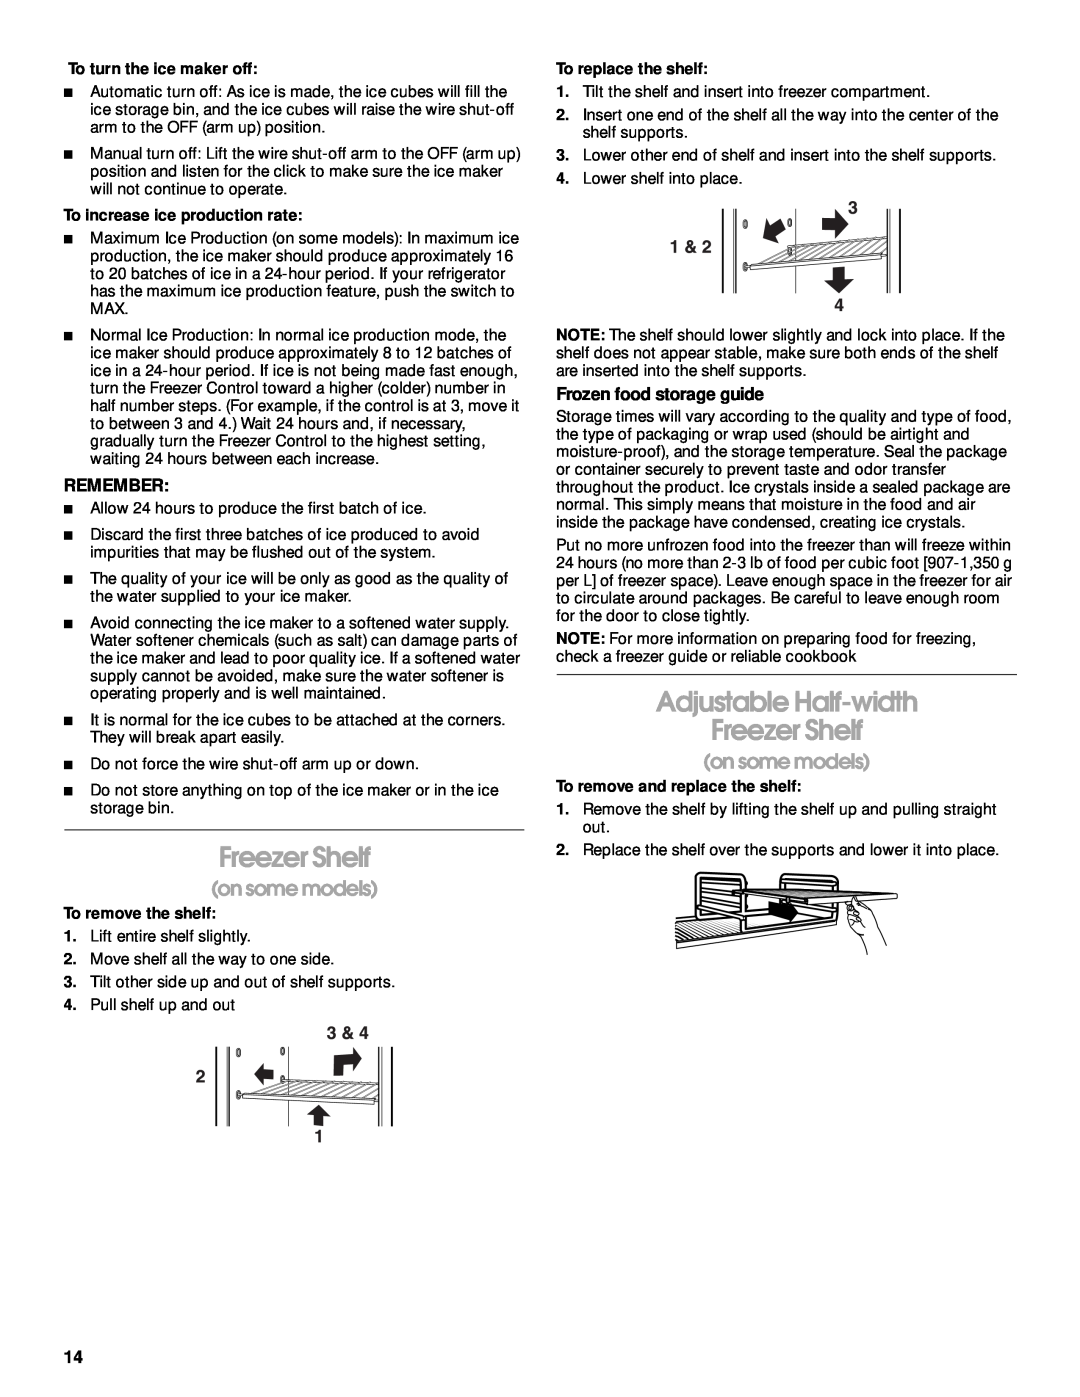 Crosley 2212430 manual Adjustable Half-width Freezer Shelf, on some models, Remember, Frozen food storage guide 